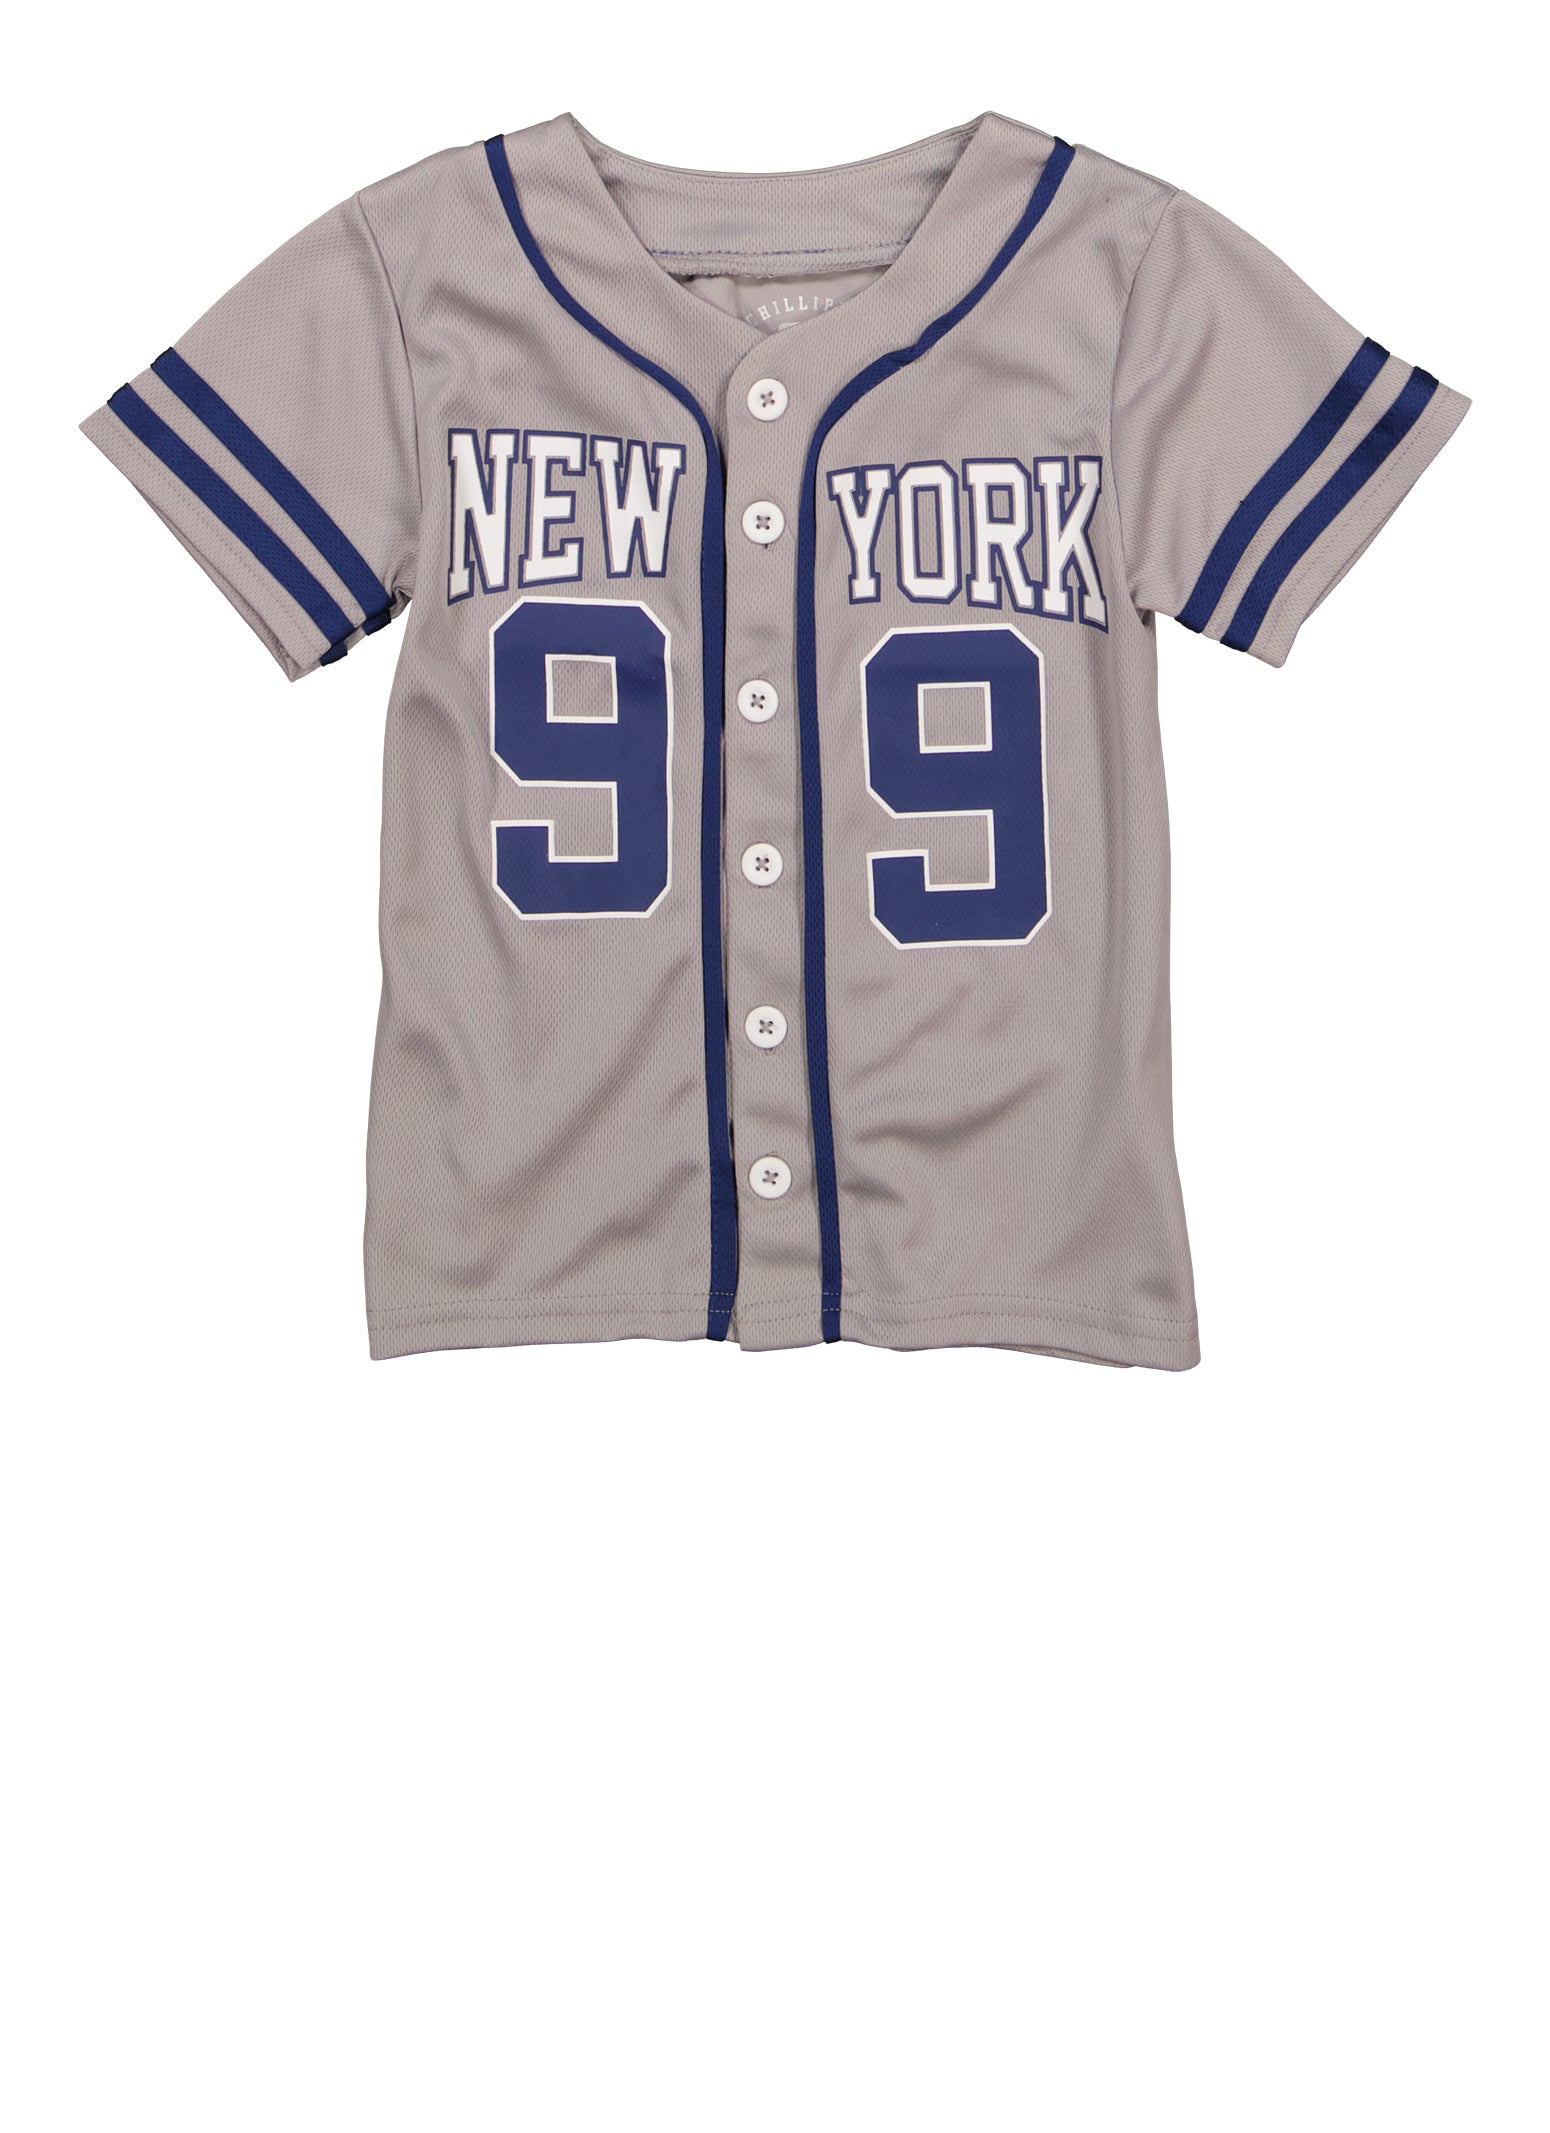 Little Boys New York Baseball Jersey,